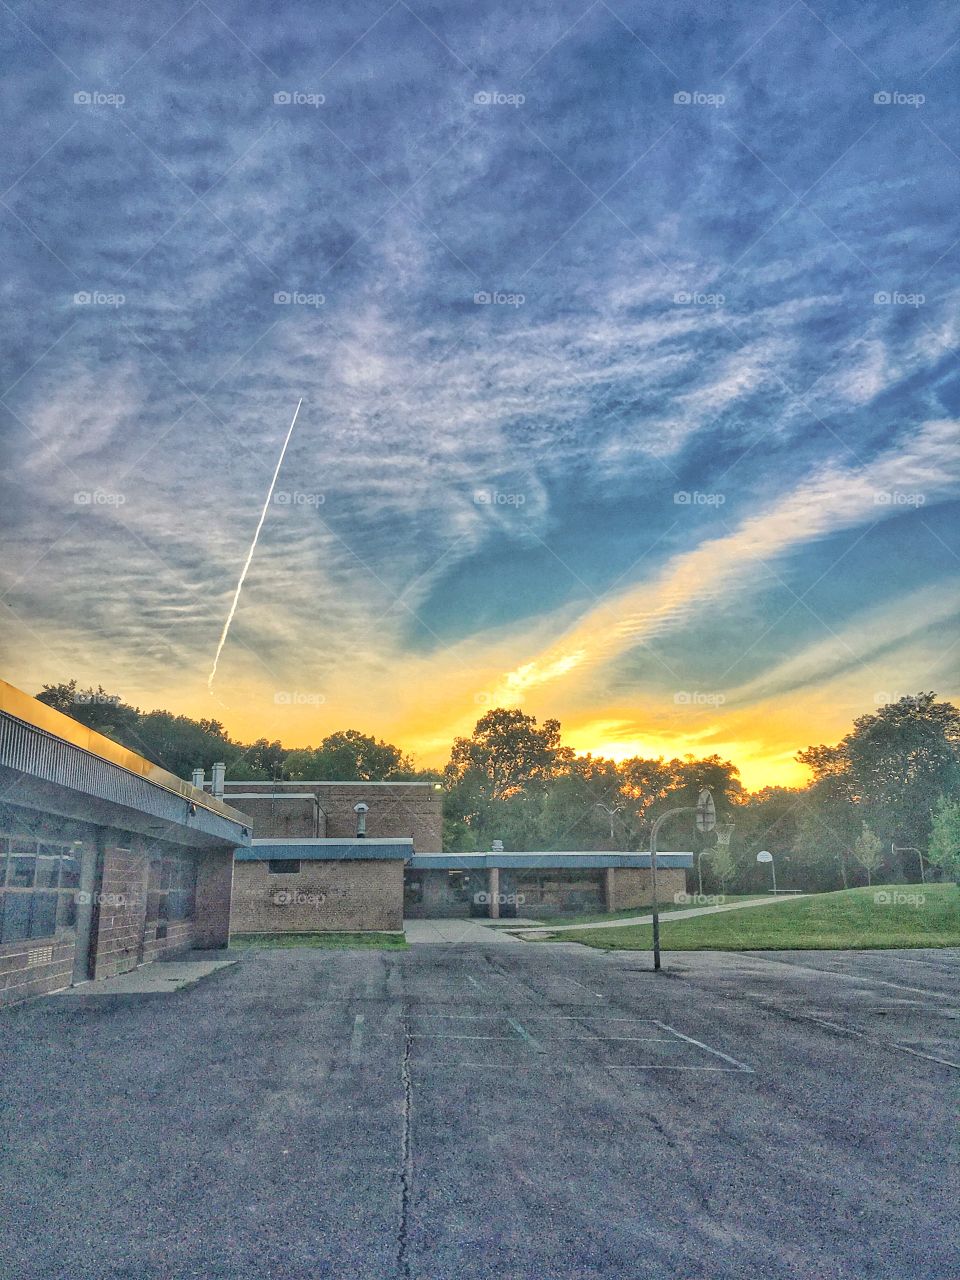 A Sunset Over a School